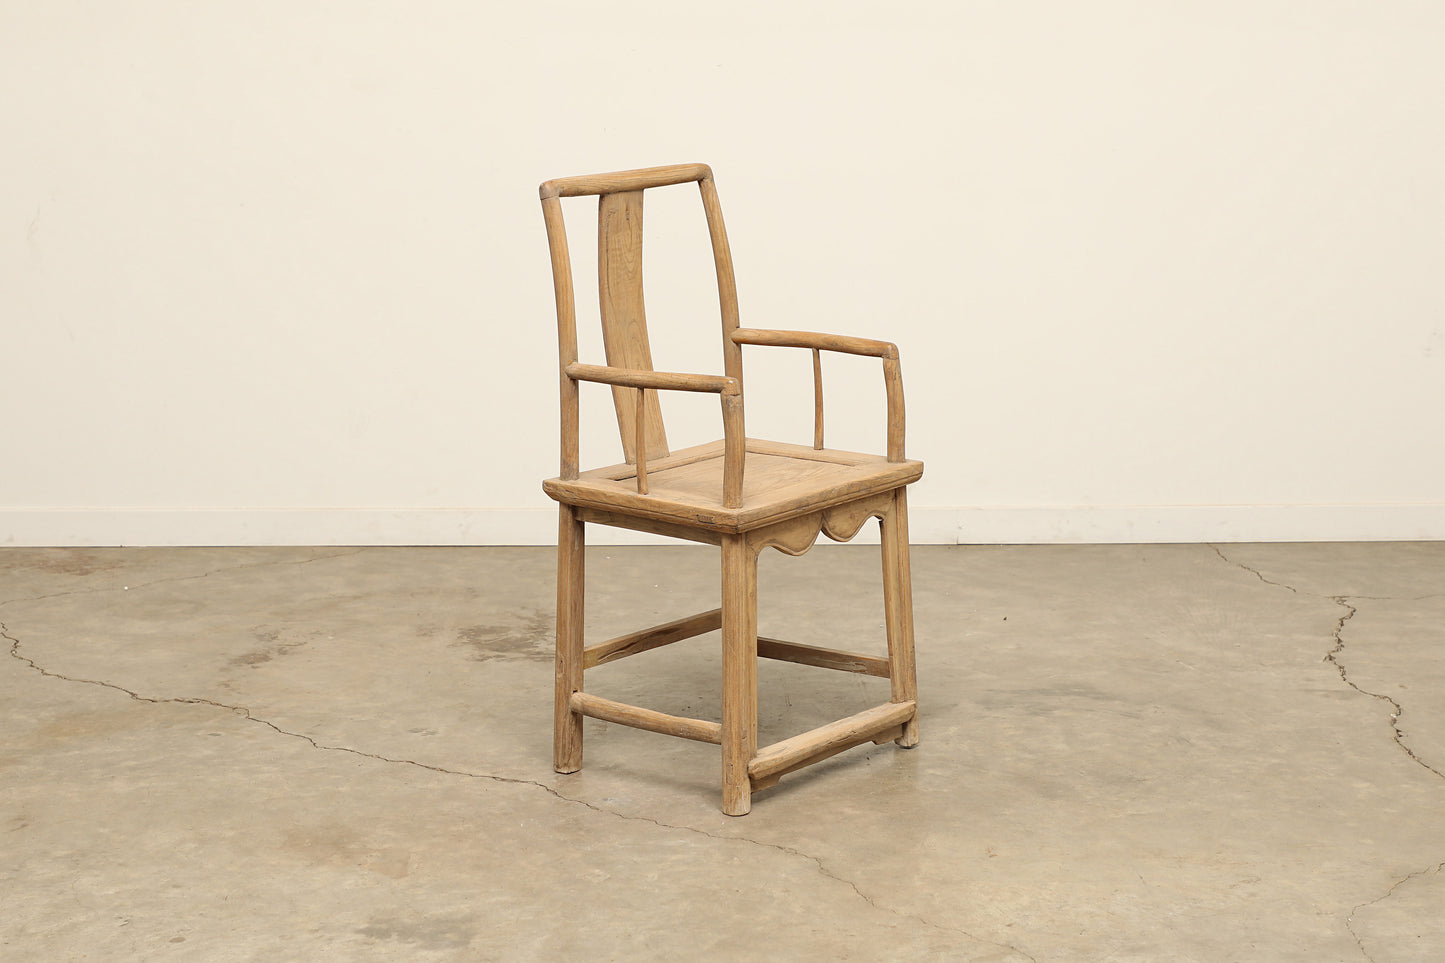 (GAV055) Vintage Elm Henan Chair - Circa 1920 (22x17x41)